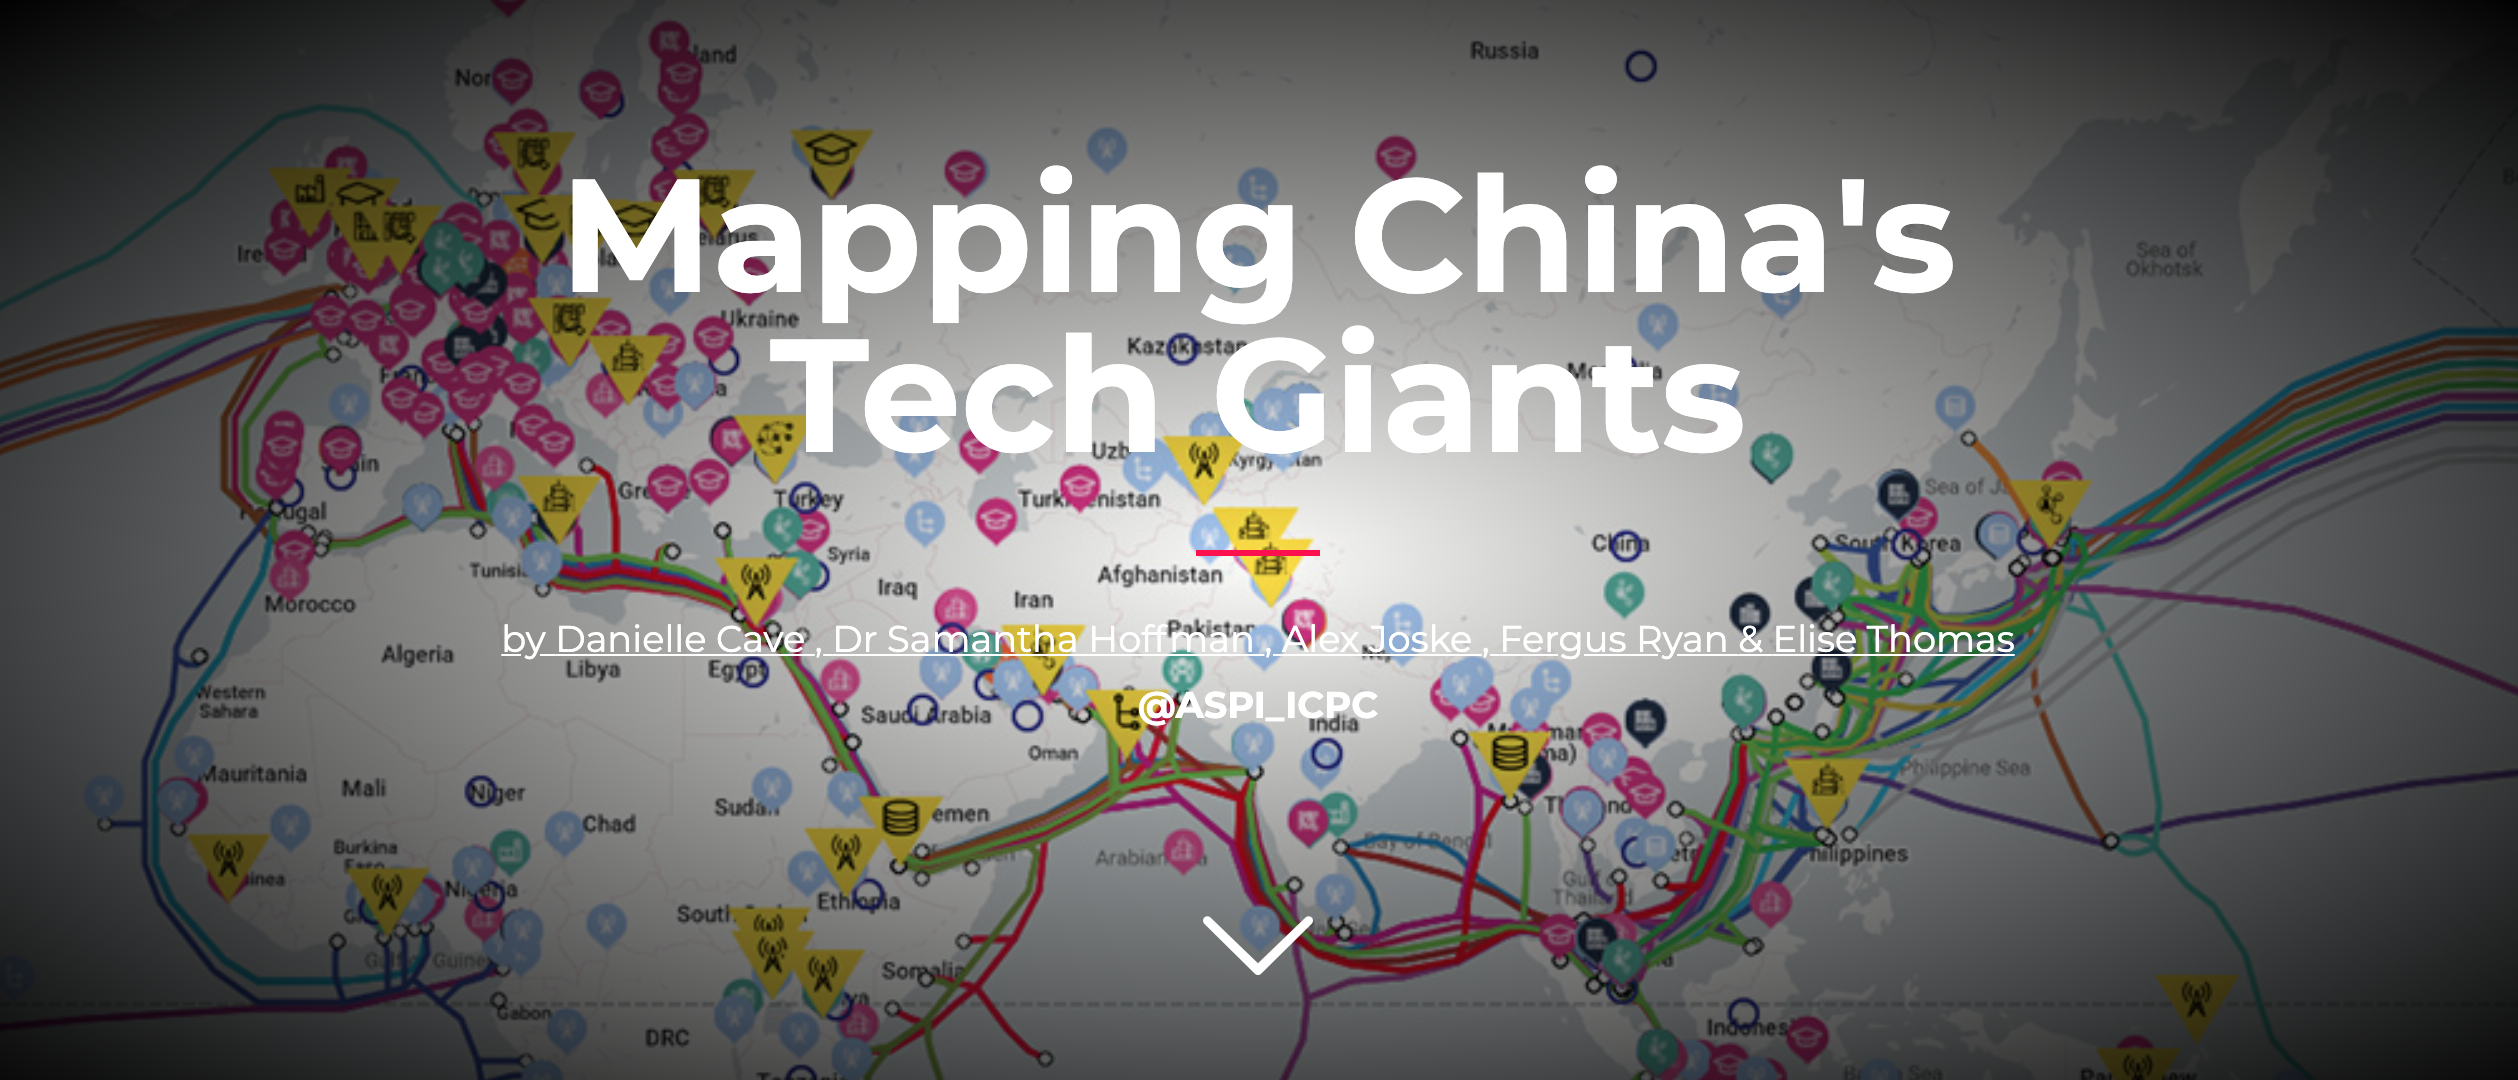 Mapping China's Tech Giants